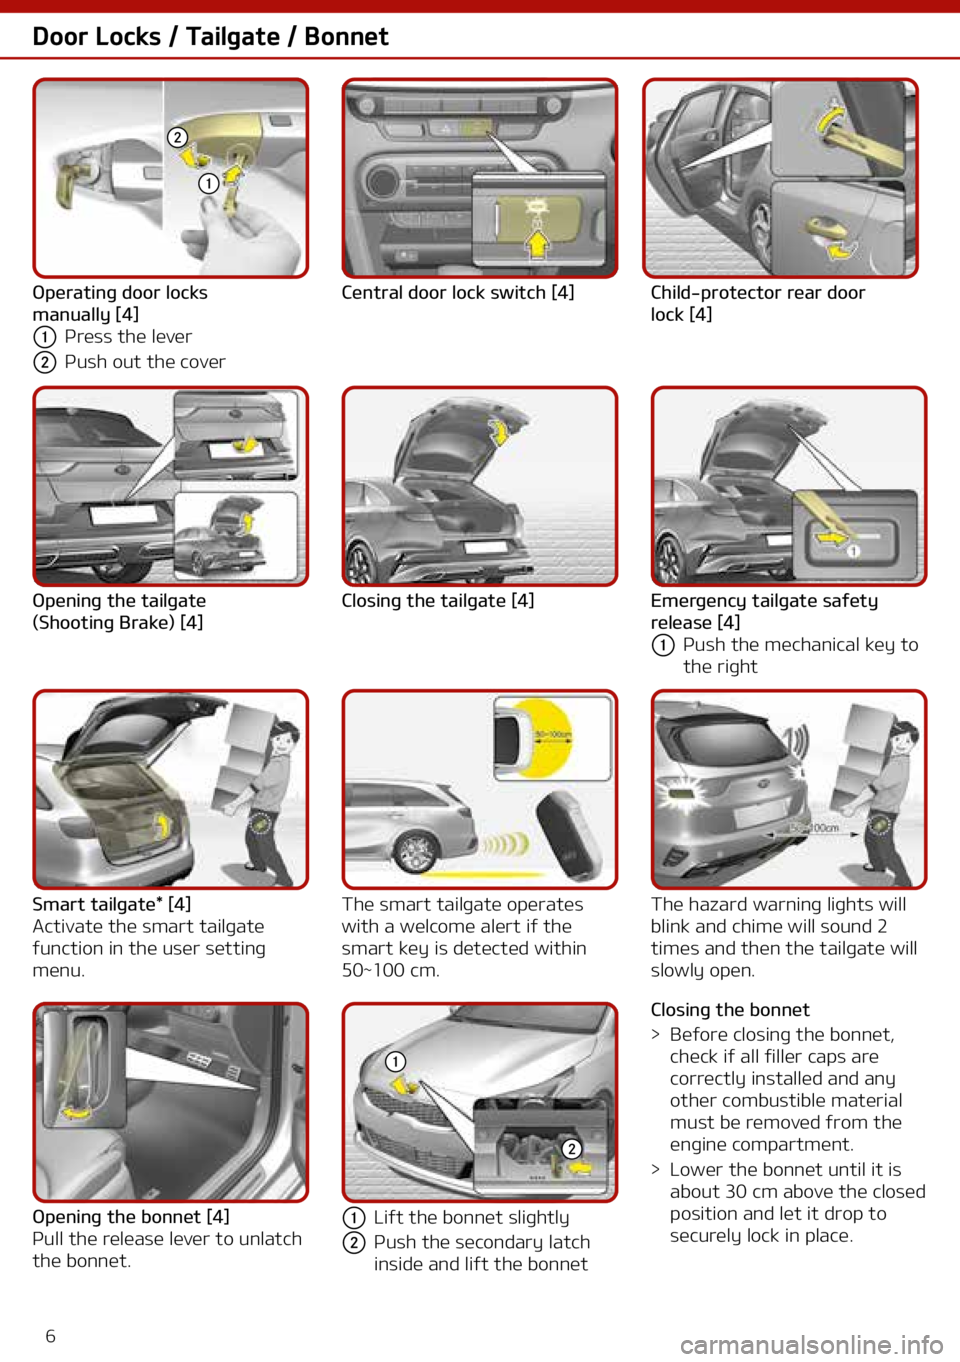 KIA CEED 2021  Owners Manual 6
Door Locks / Tailgate / Bonnet
Central door lock switch [4] Child-protector rear door 
lock   [4]
Opening the tailgate 
(Shooting
 
Brake)
 
[4] Closing the tailgate
  [4]Emergency tailgate safety 
